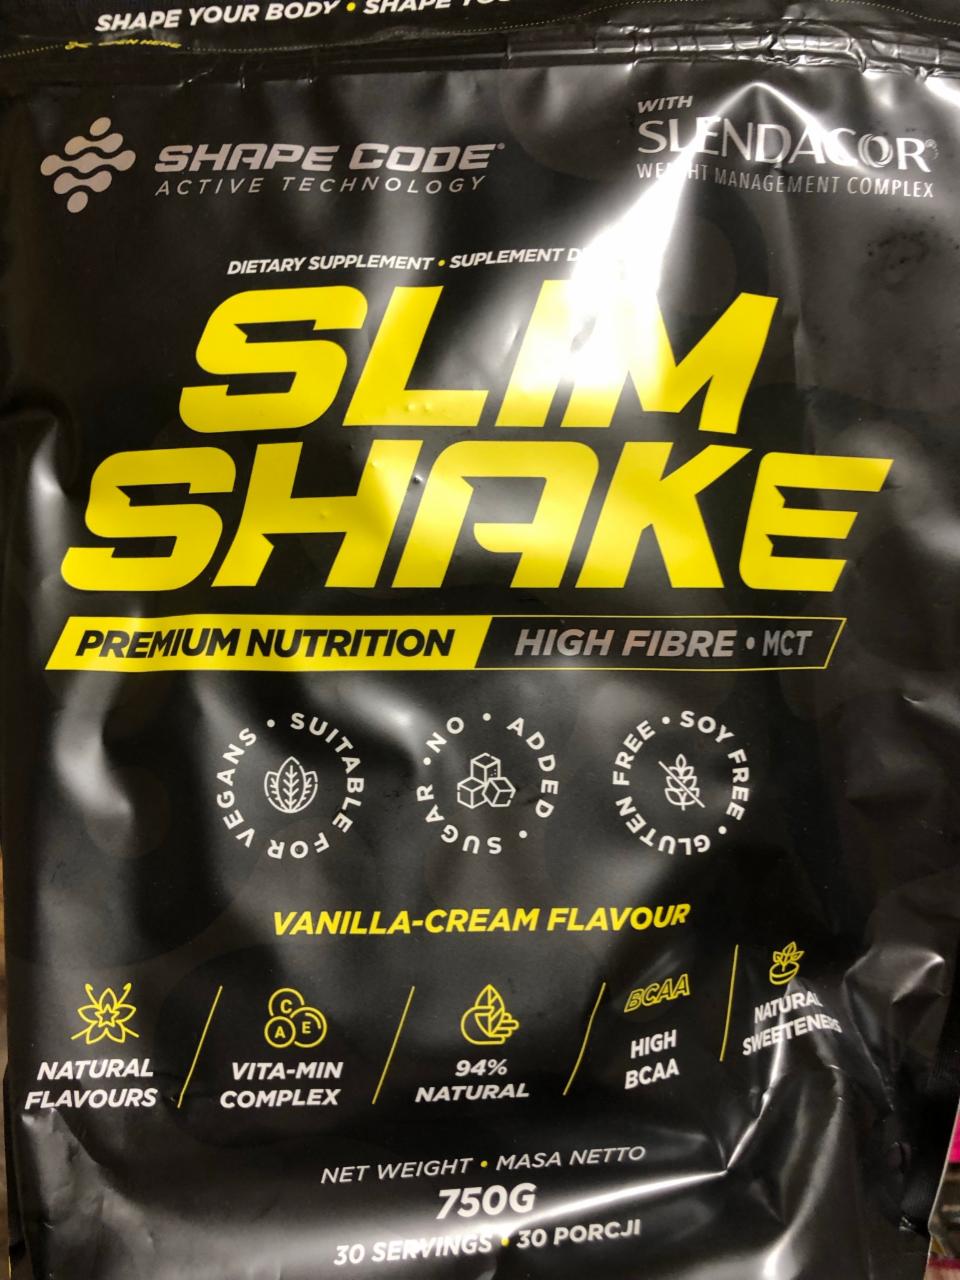 Zdjęcia - Slim Shake Vanilla-Cream flavour Shape Code